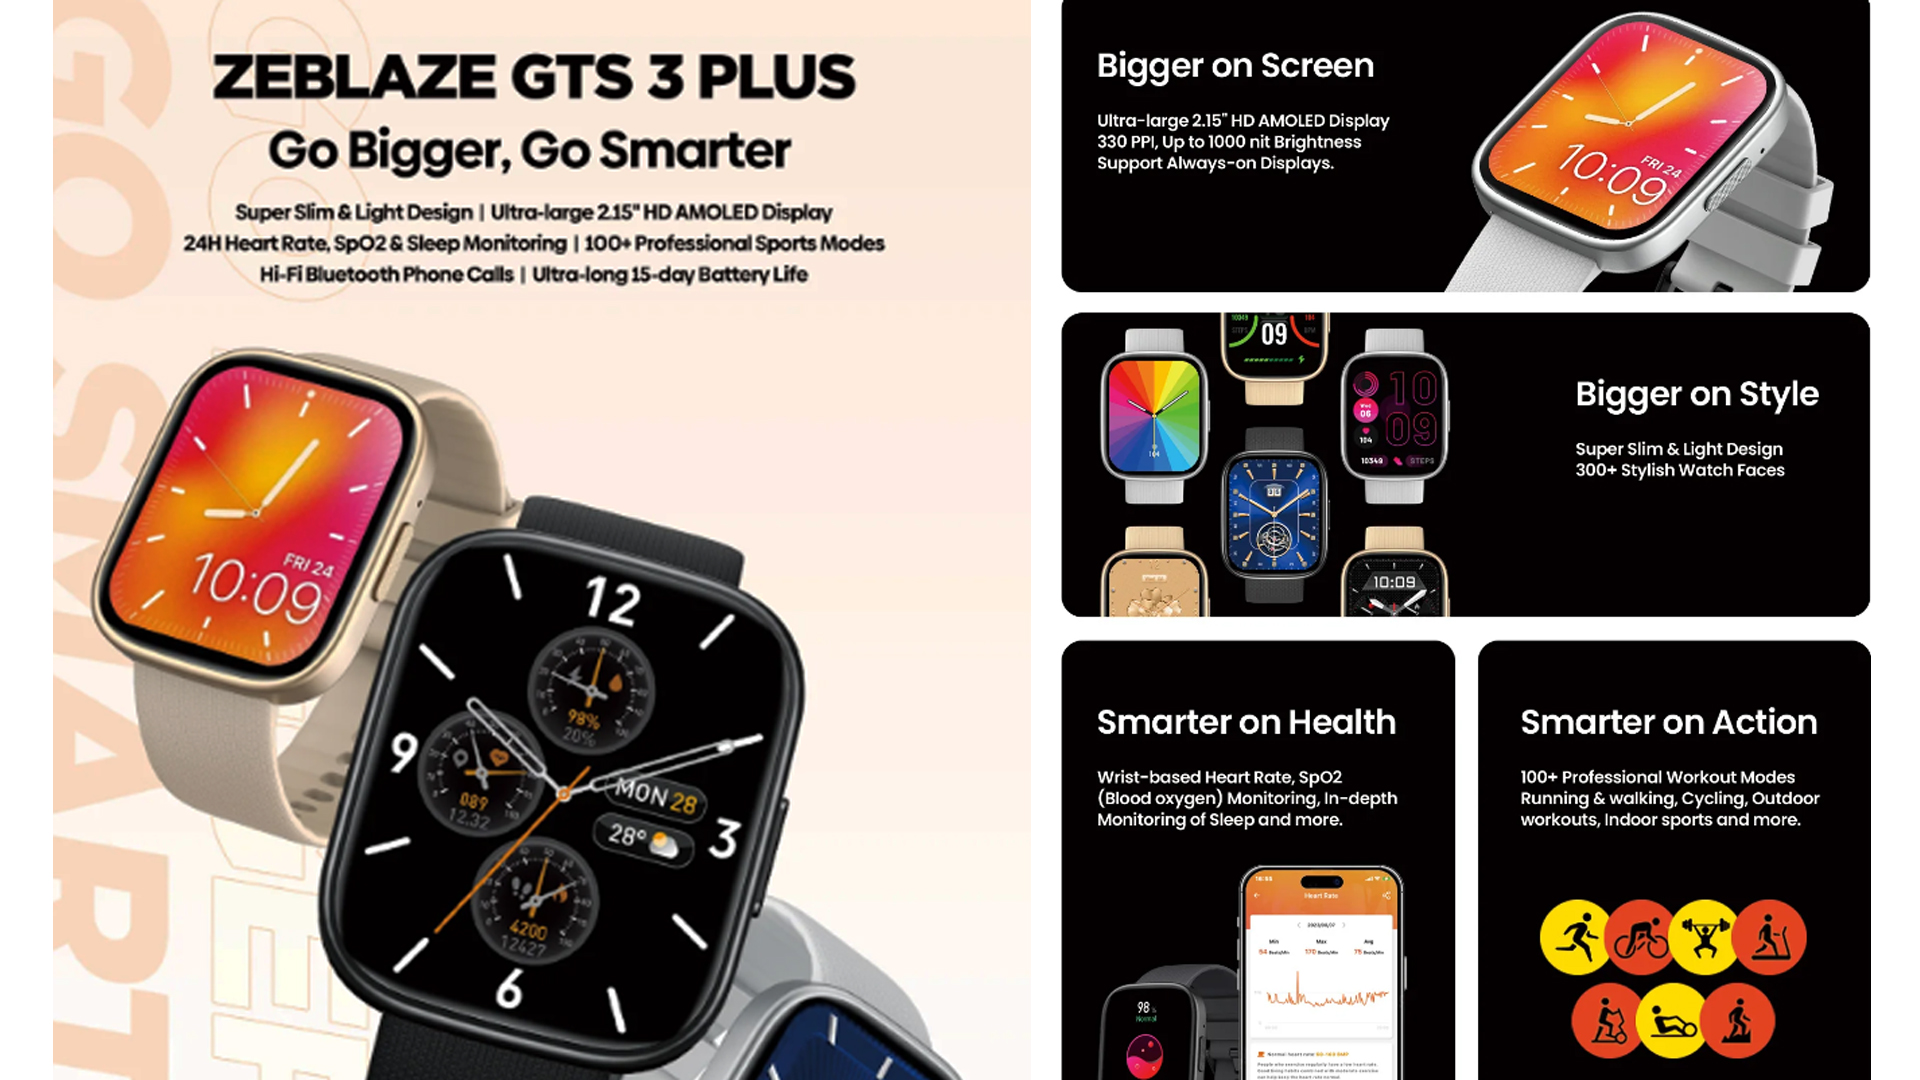 Zeblaze GTS 3 Plus smartwatch review, features, specs, price